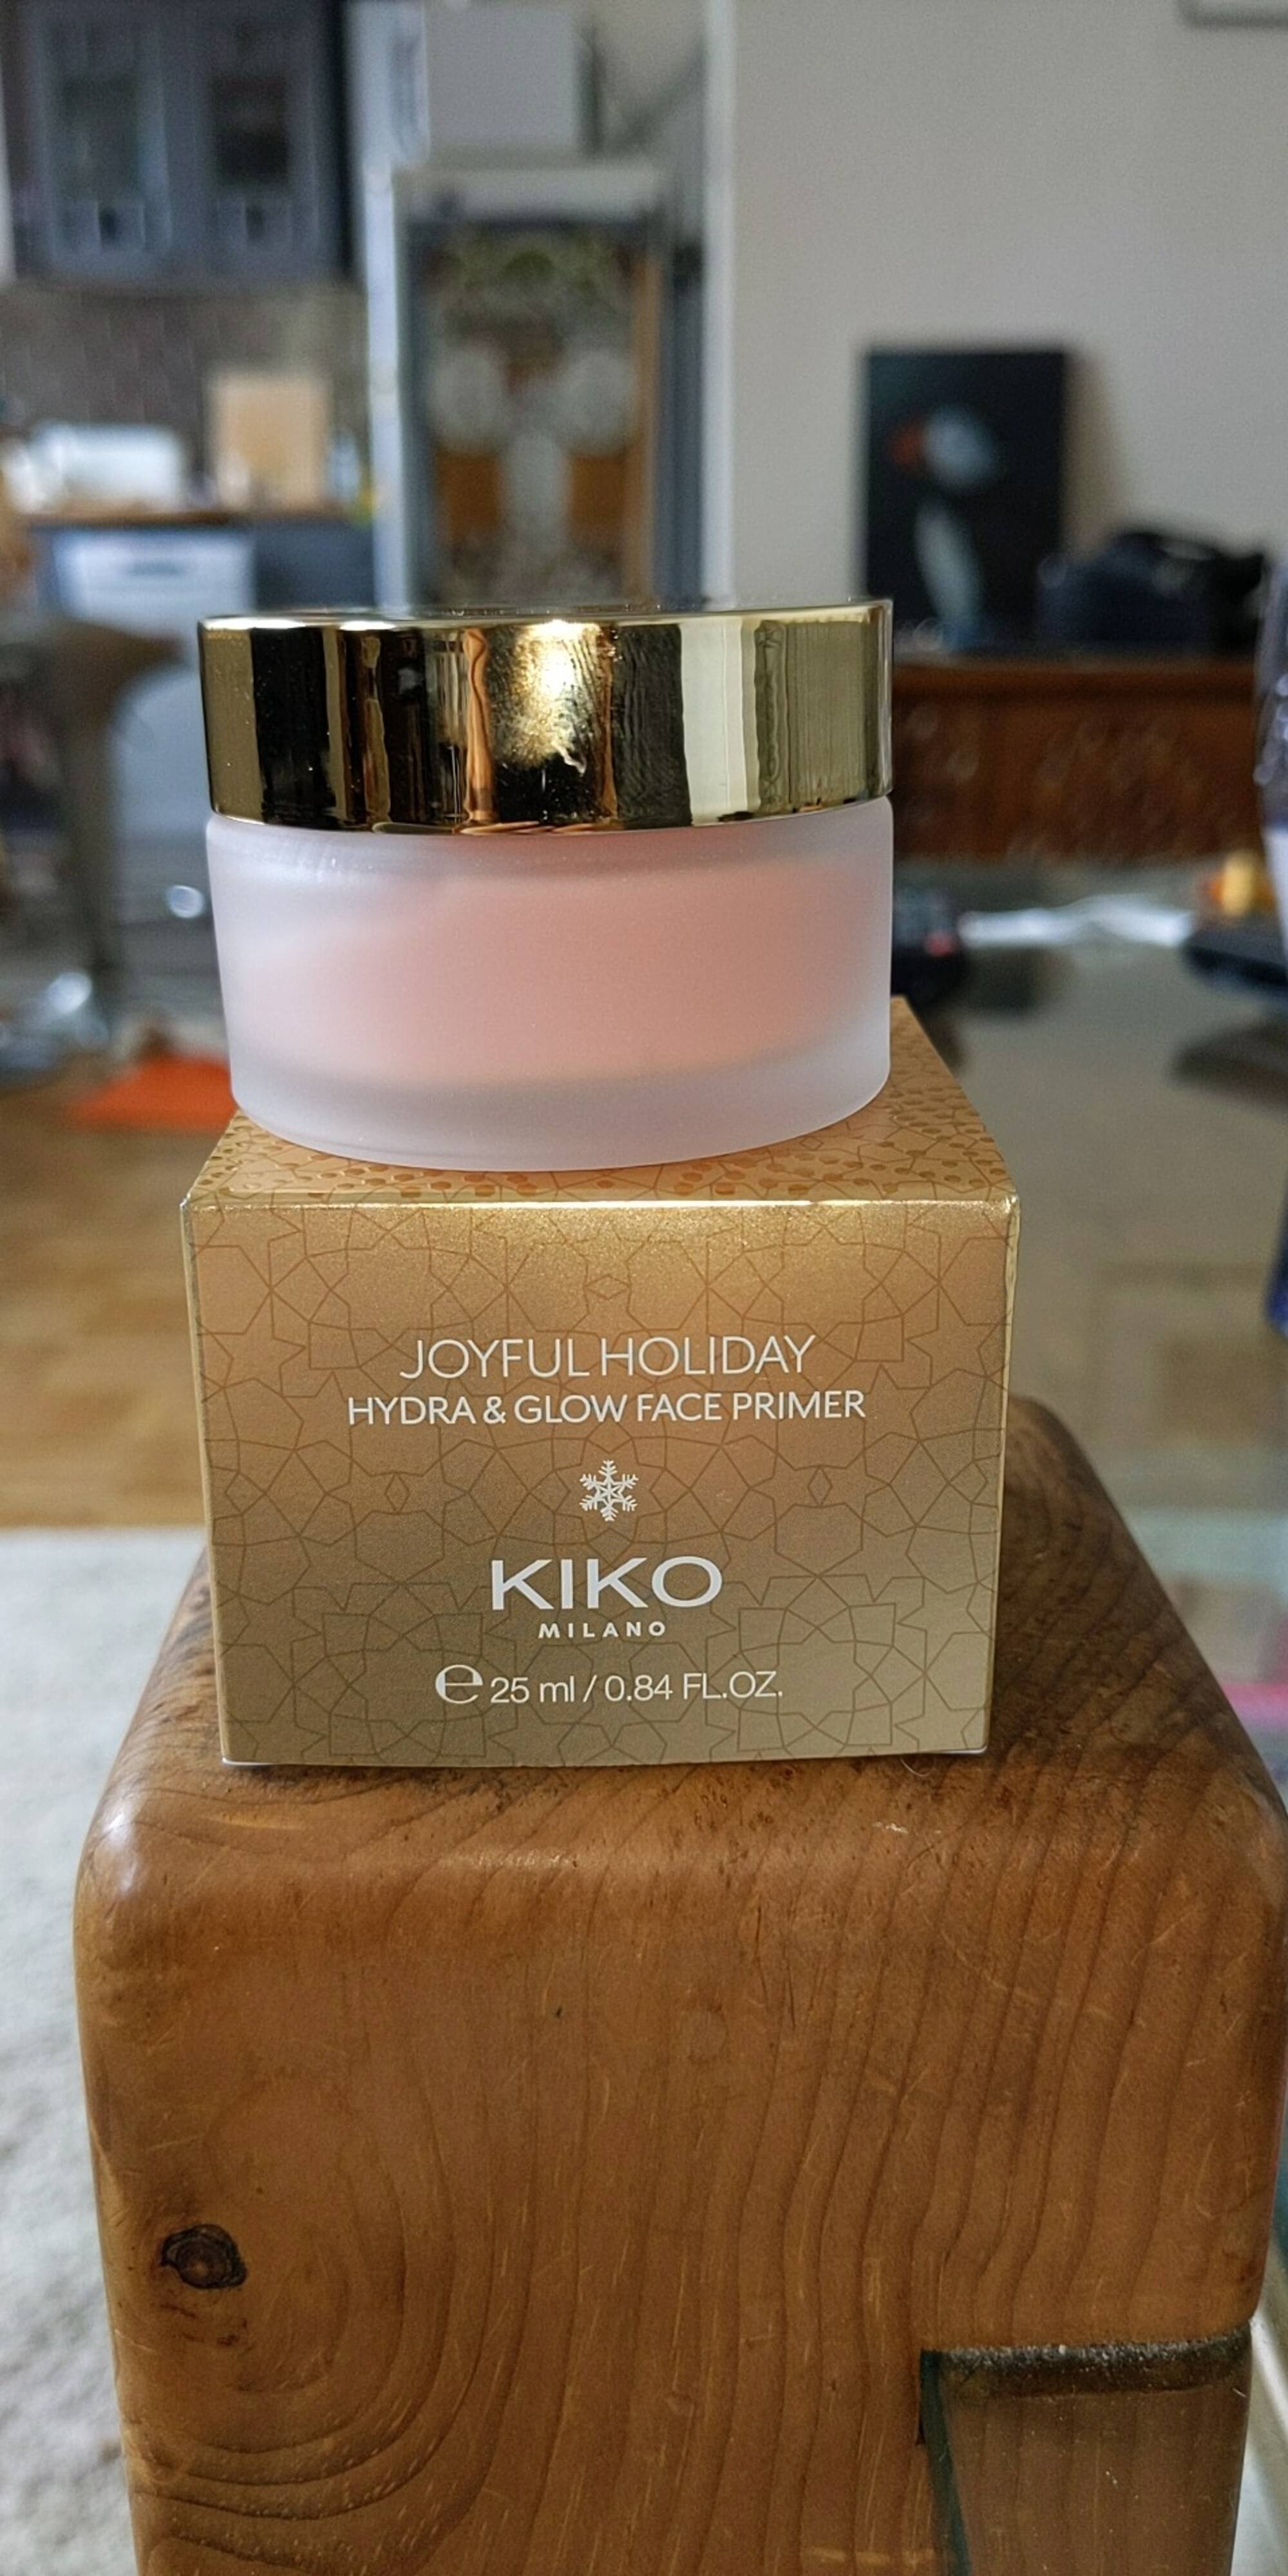 KIKO - Joyful holiday - Hydra & glow face primer